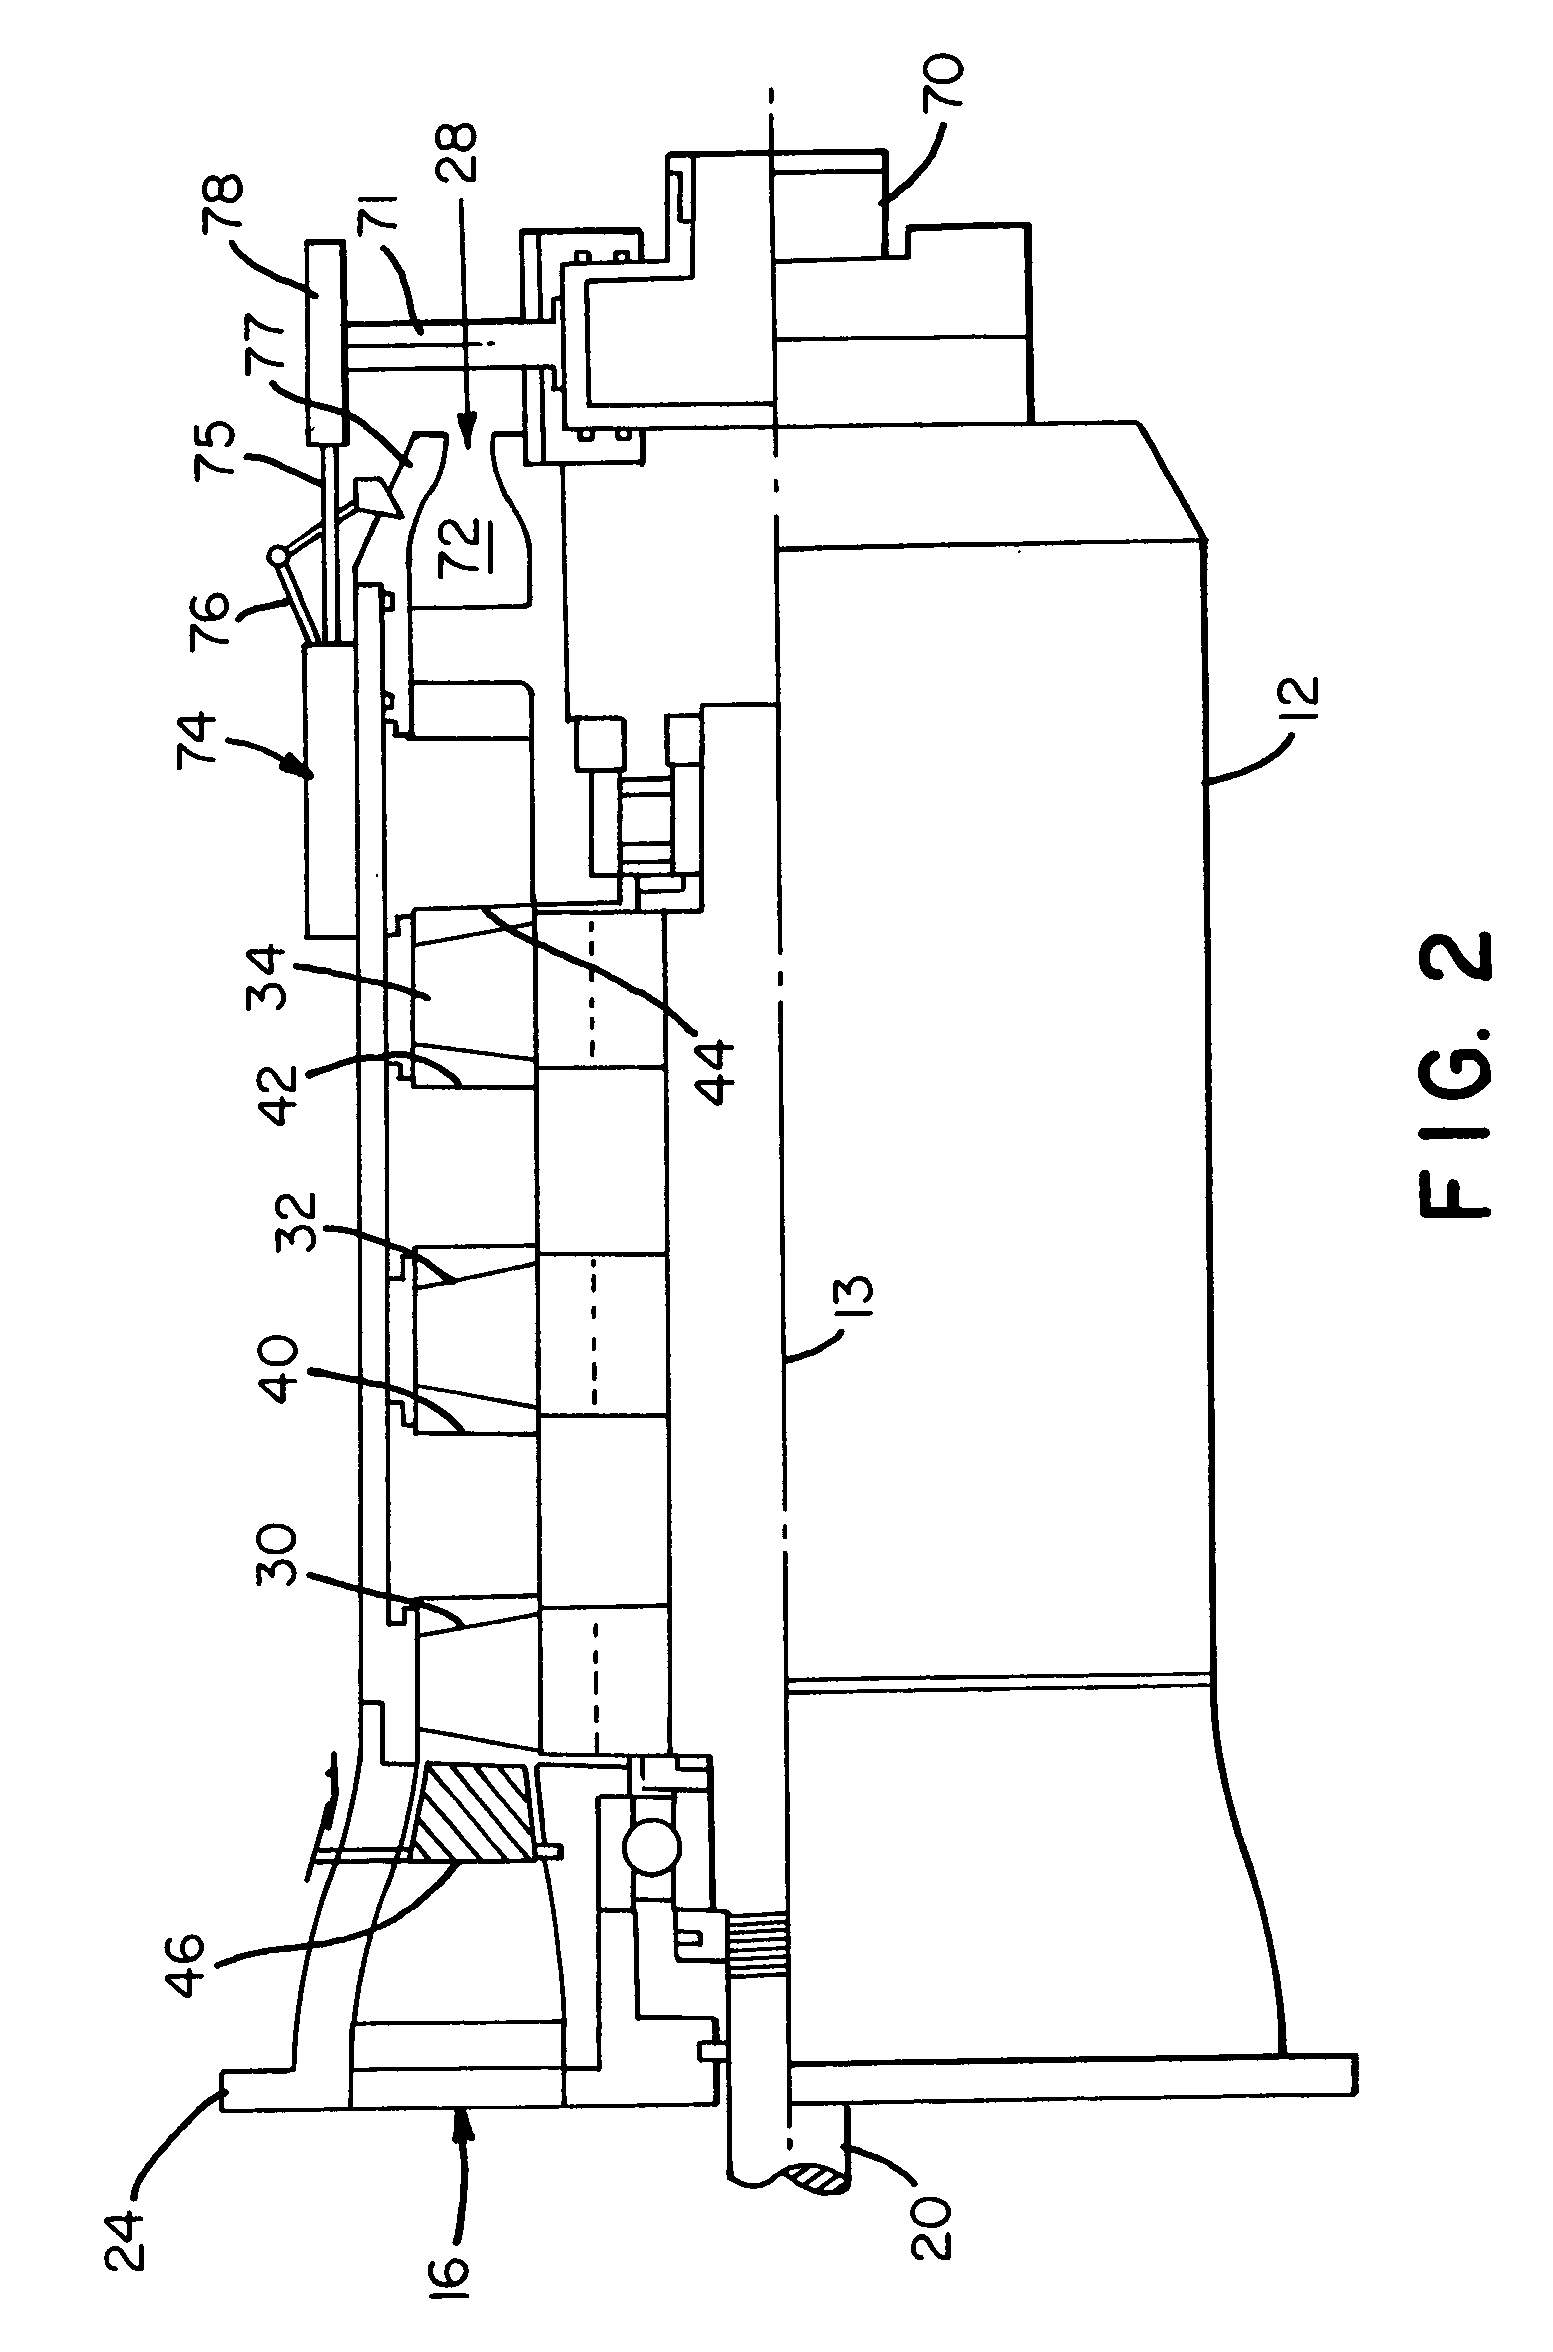 Axial flow pump or marine propulsion device